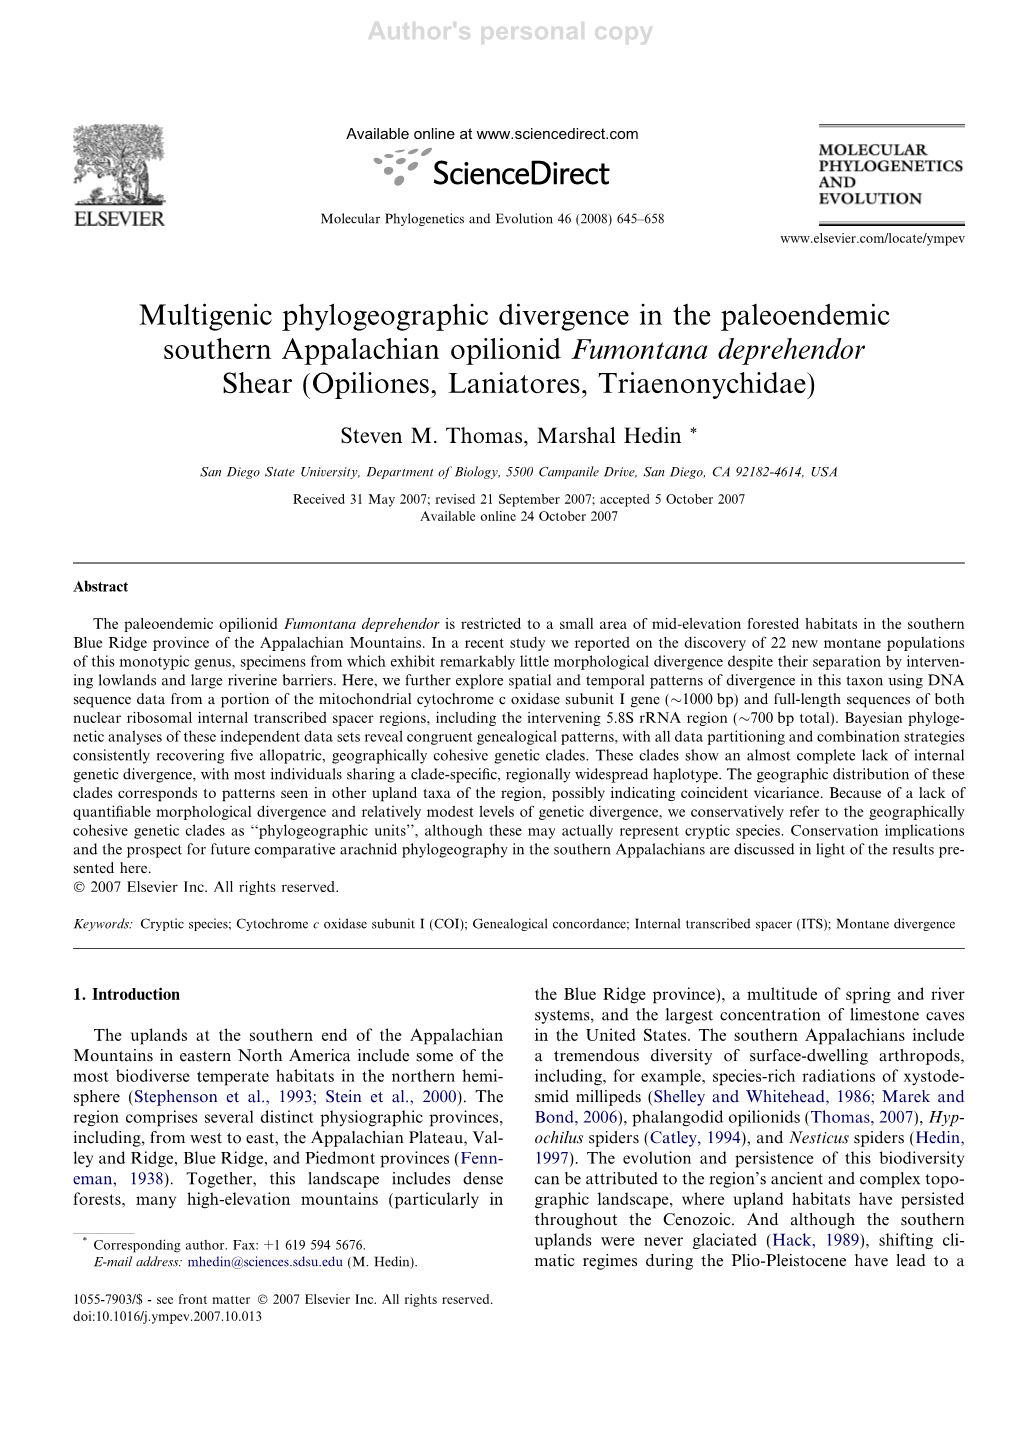 Multigenic Phylogeographic Divergence in the Paleoendemic Southern Appalachian Opilionid Fumontana Deprehendor Shear (Opiliones, Laniatores, Triaenonychidae)